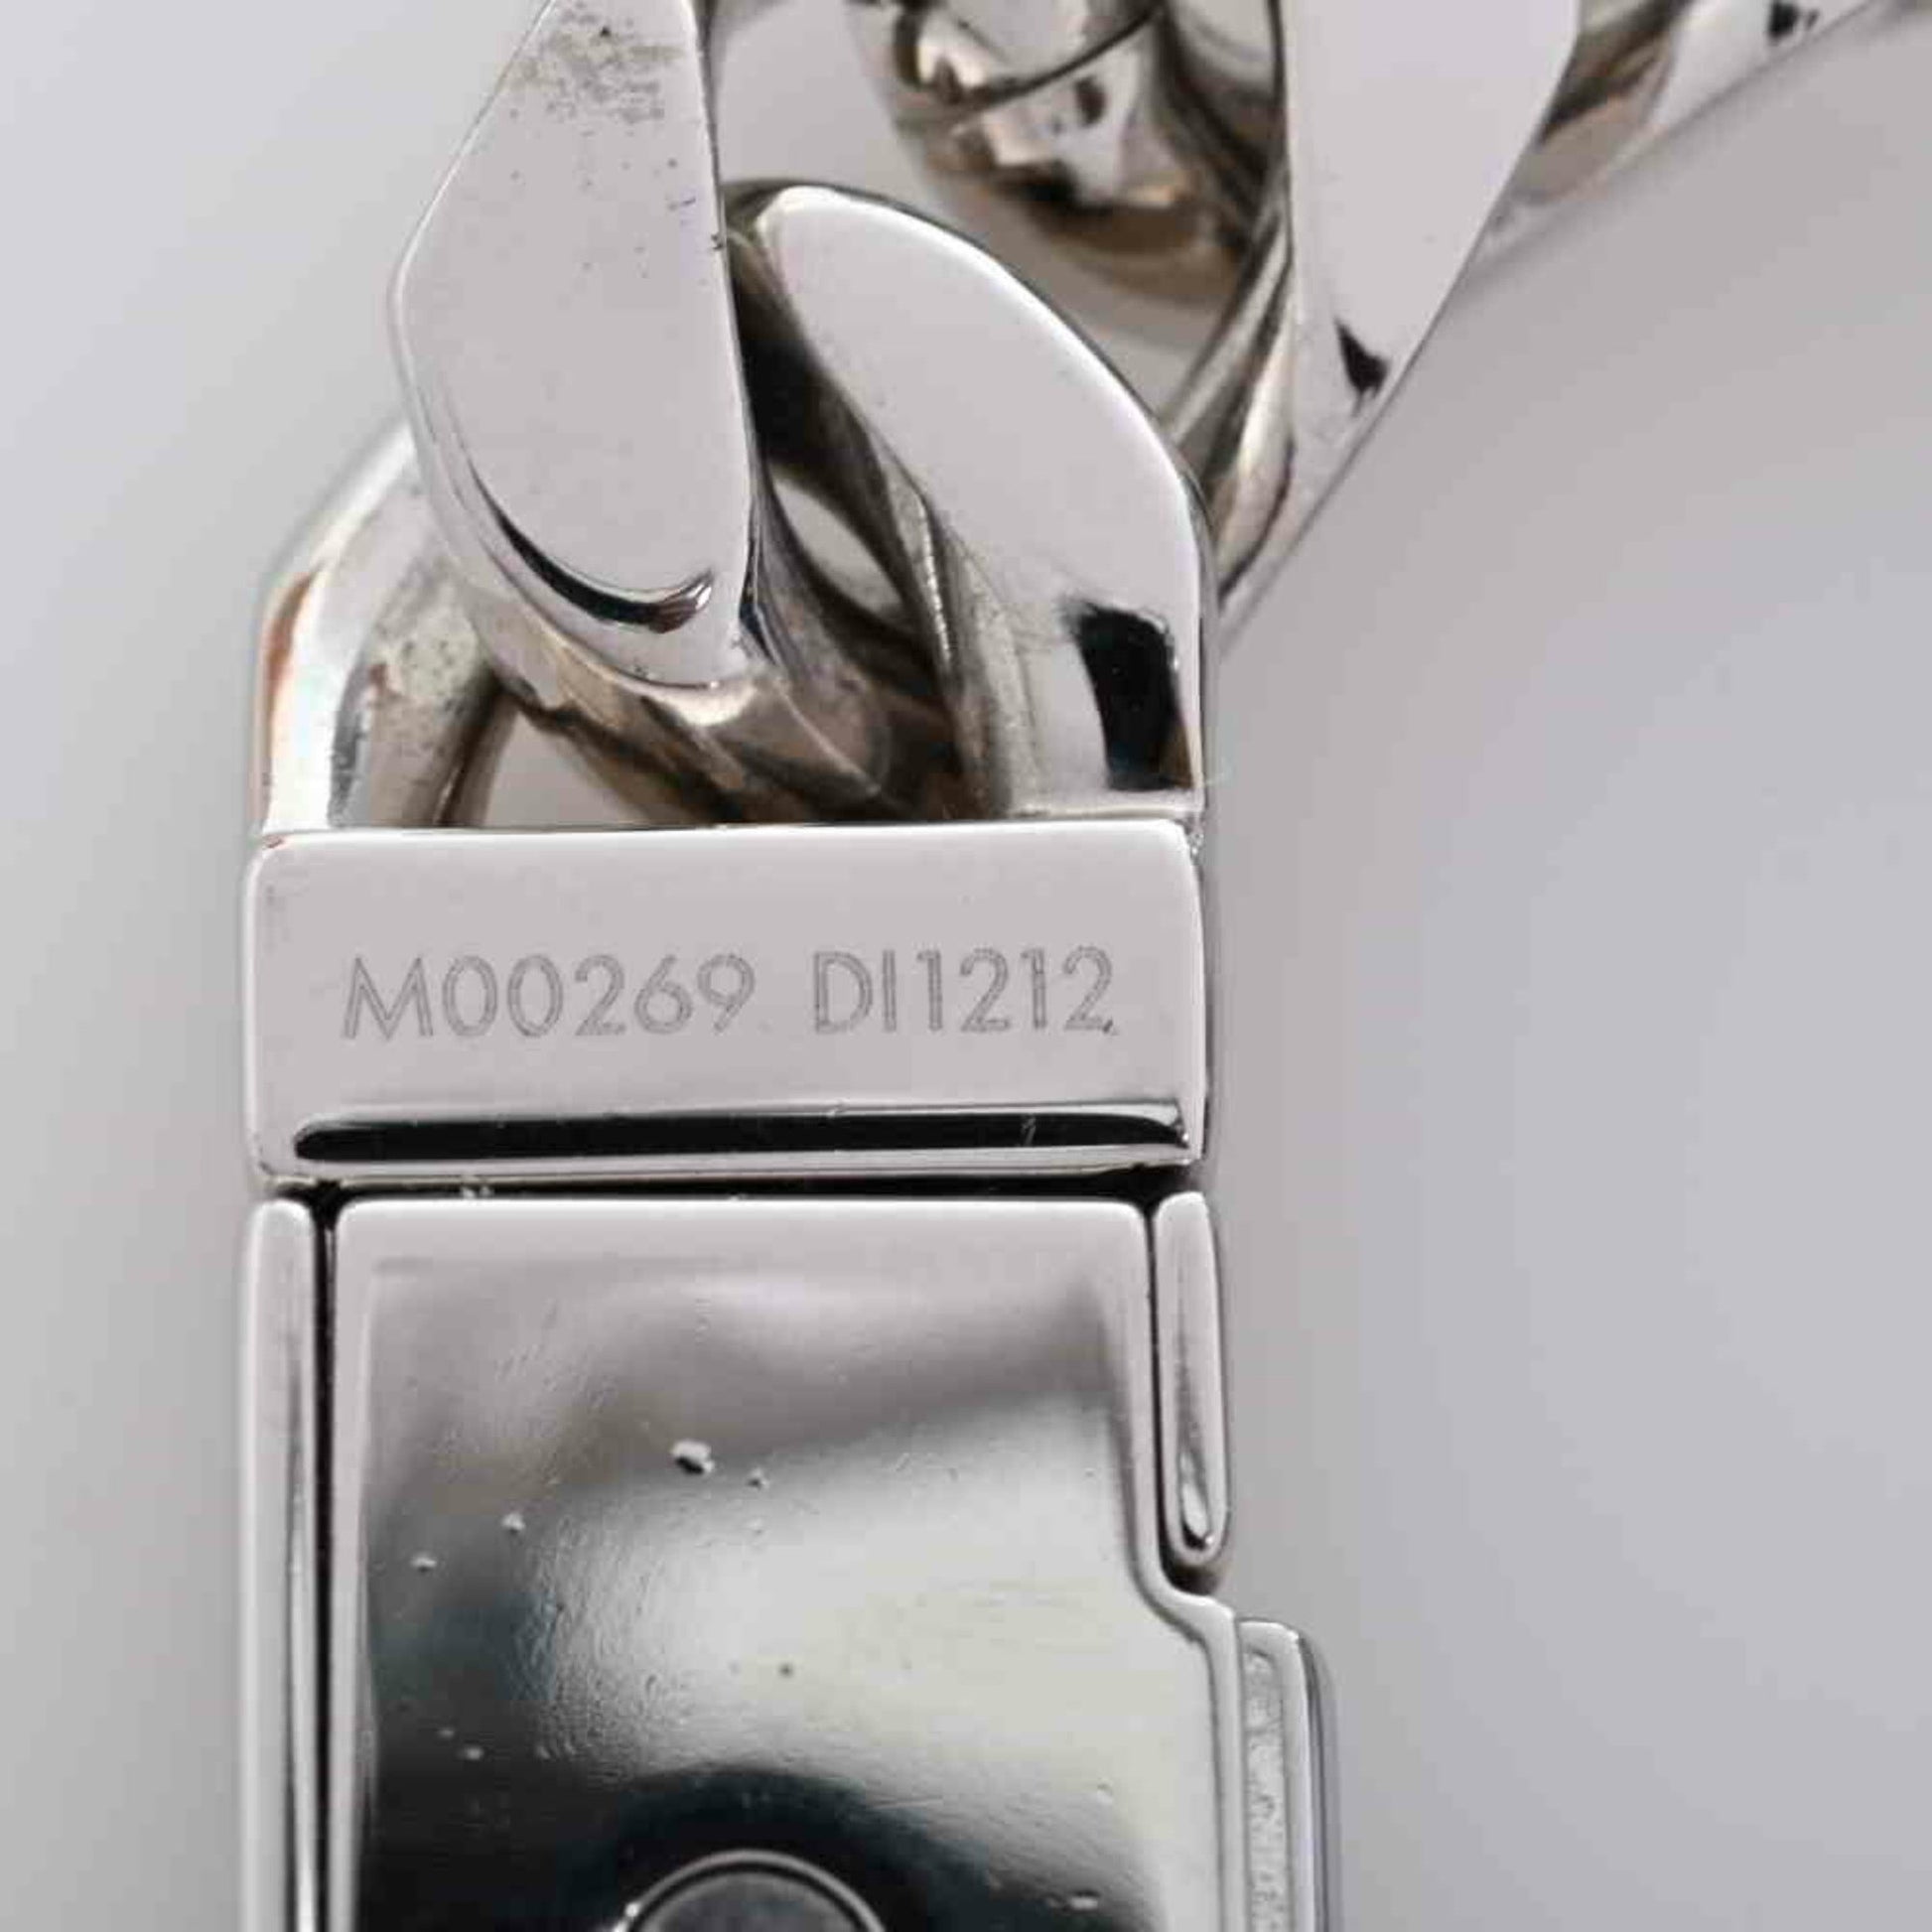 Louis Vuitton® Monogram Chain Bracelet Grey. Size L